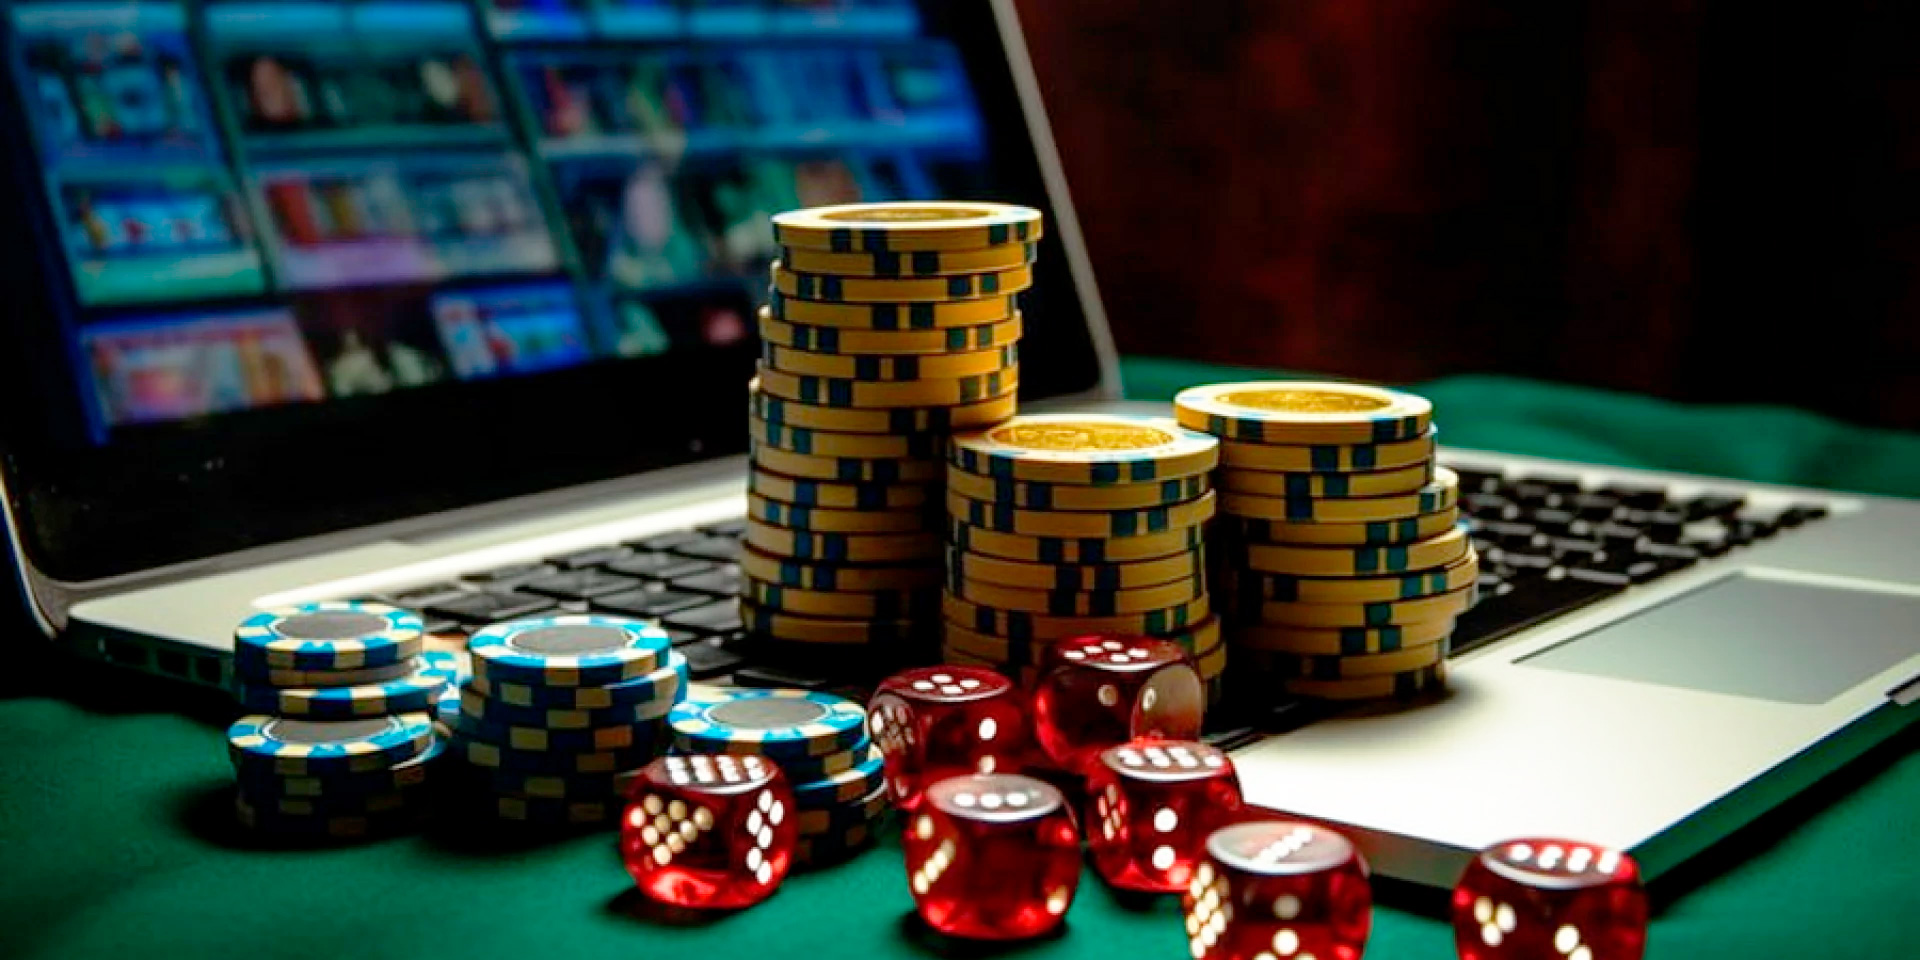 Casino risks